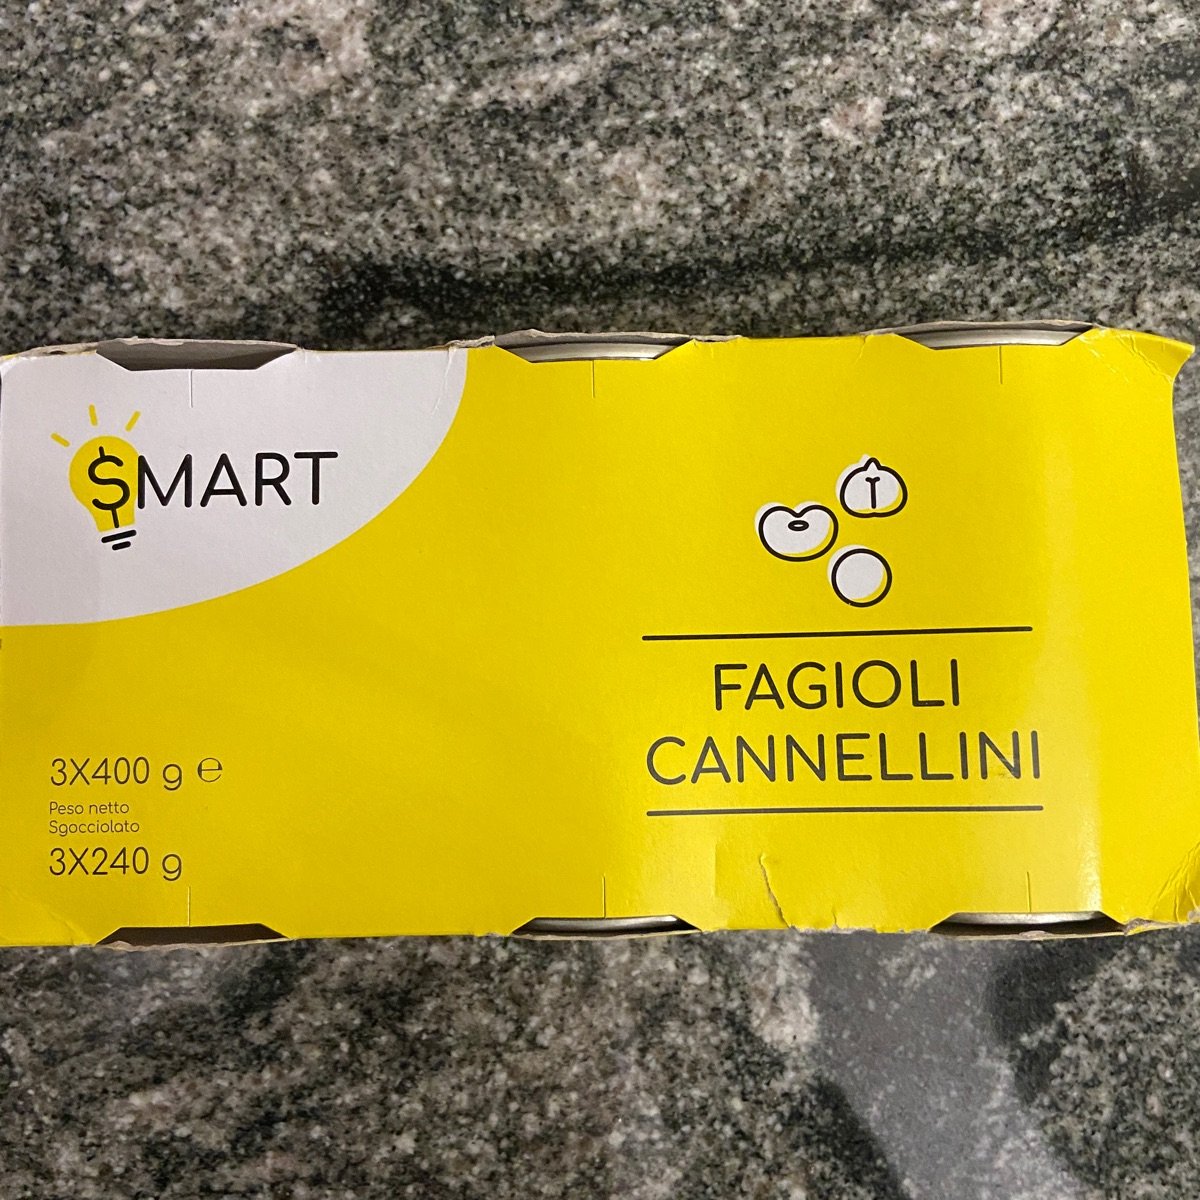 Esselunga - Smart Fagioli cannellini in lattina Reviews | abillion